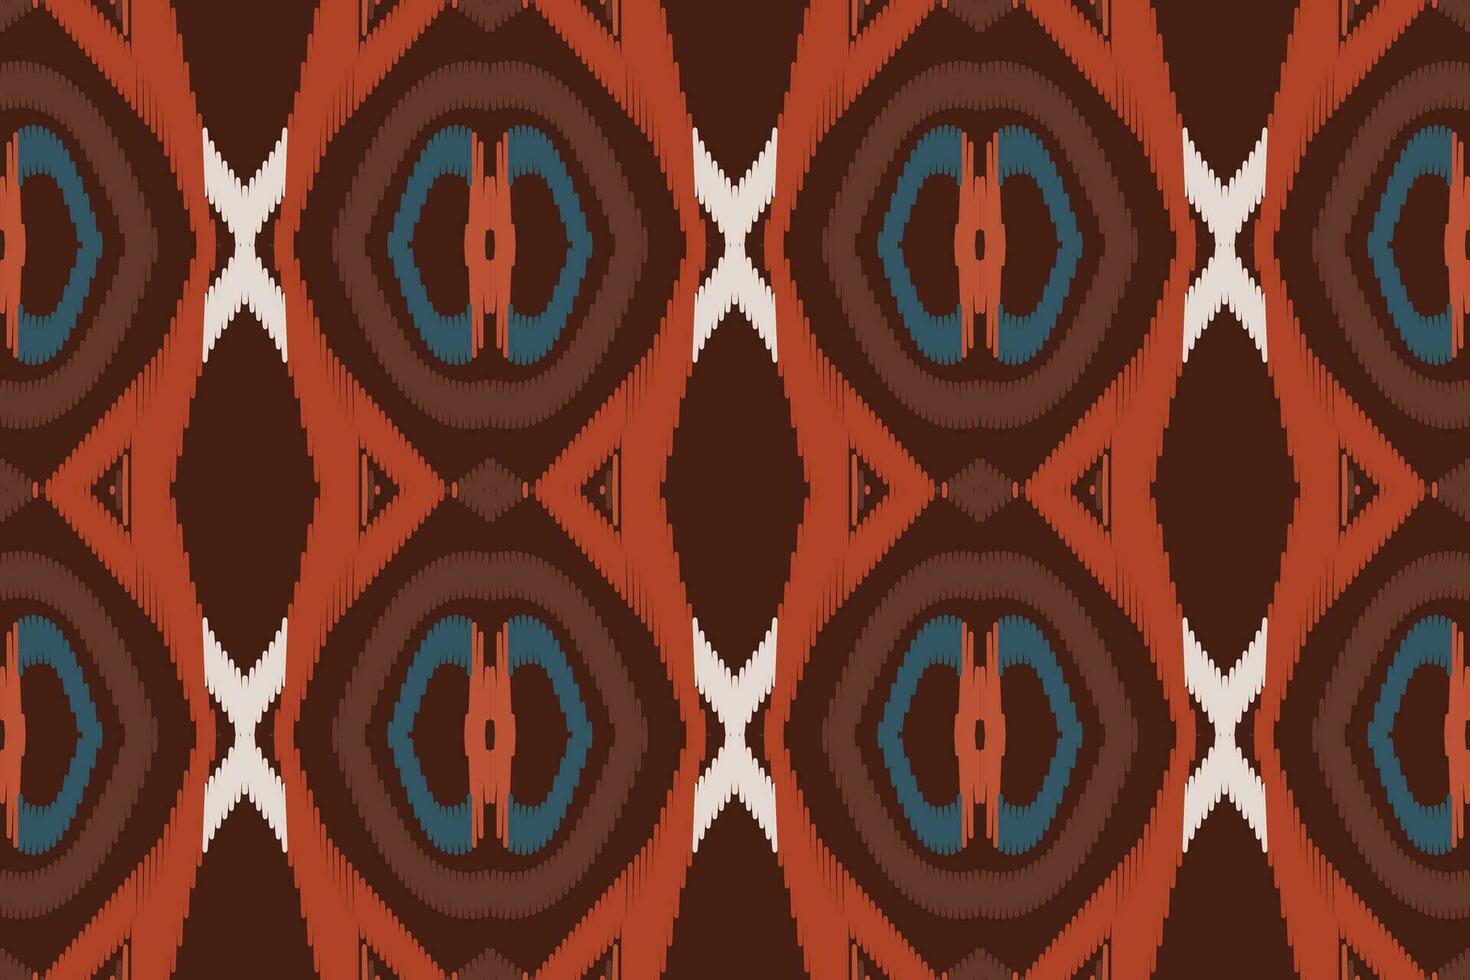 ikat sömlös mönster broderi bakgrund. ikat sömlös mönster geometrisk etnisk orientalisk mönster traditionell.aztec stil abstrakt vektor design textur, tyg, kläder, inslagning, sarong.